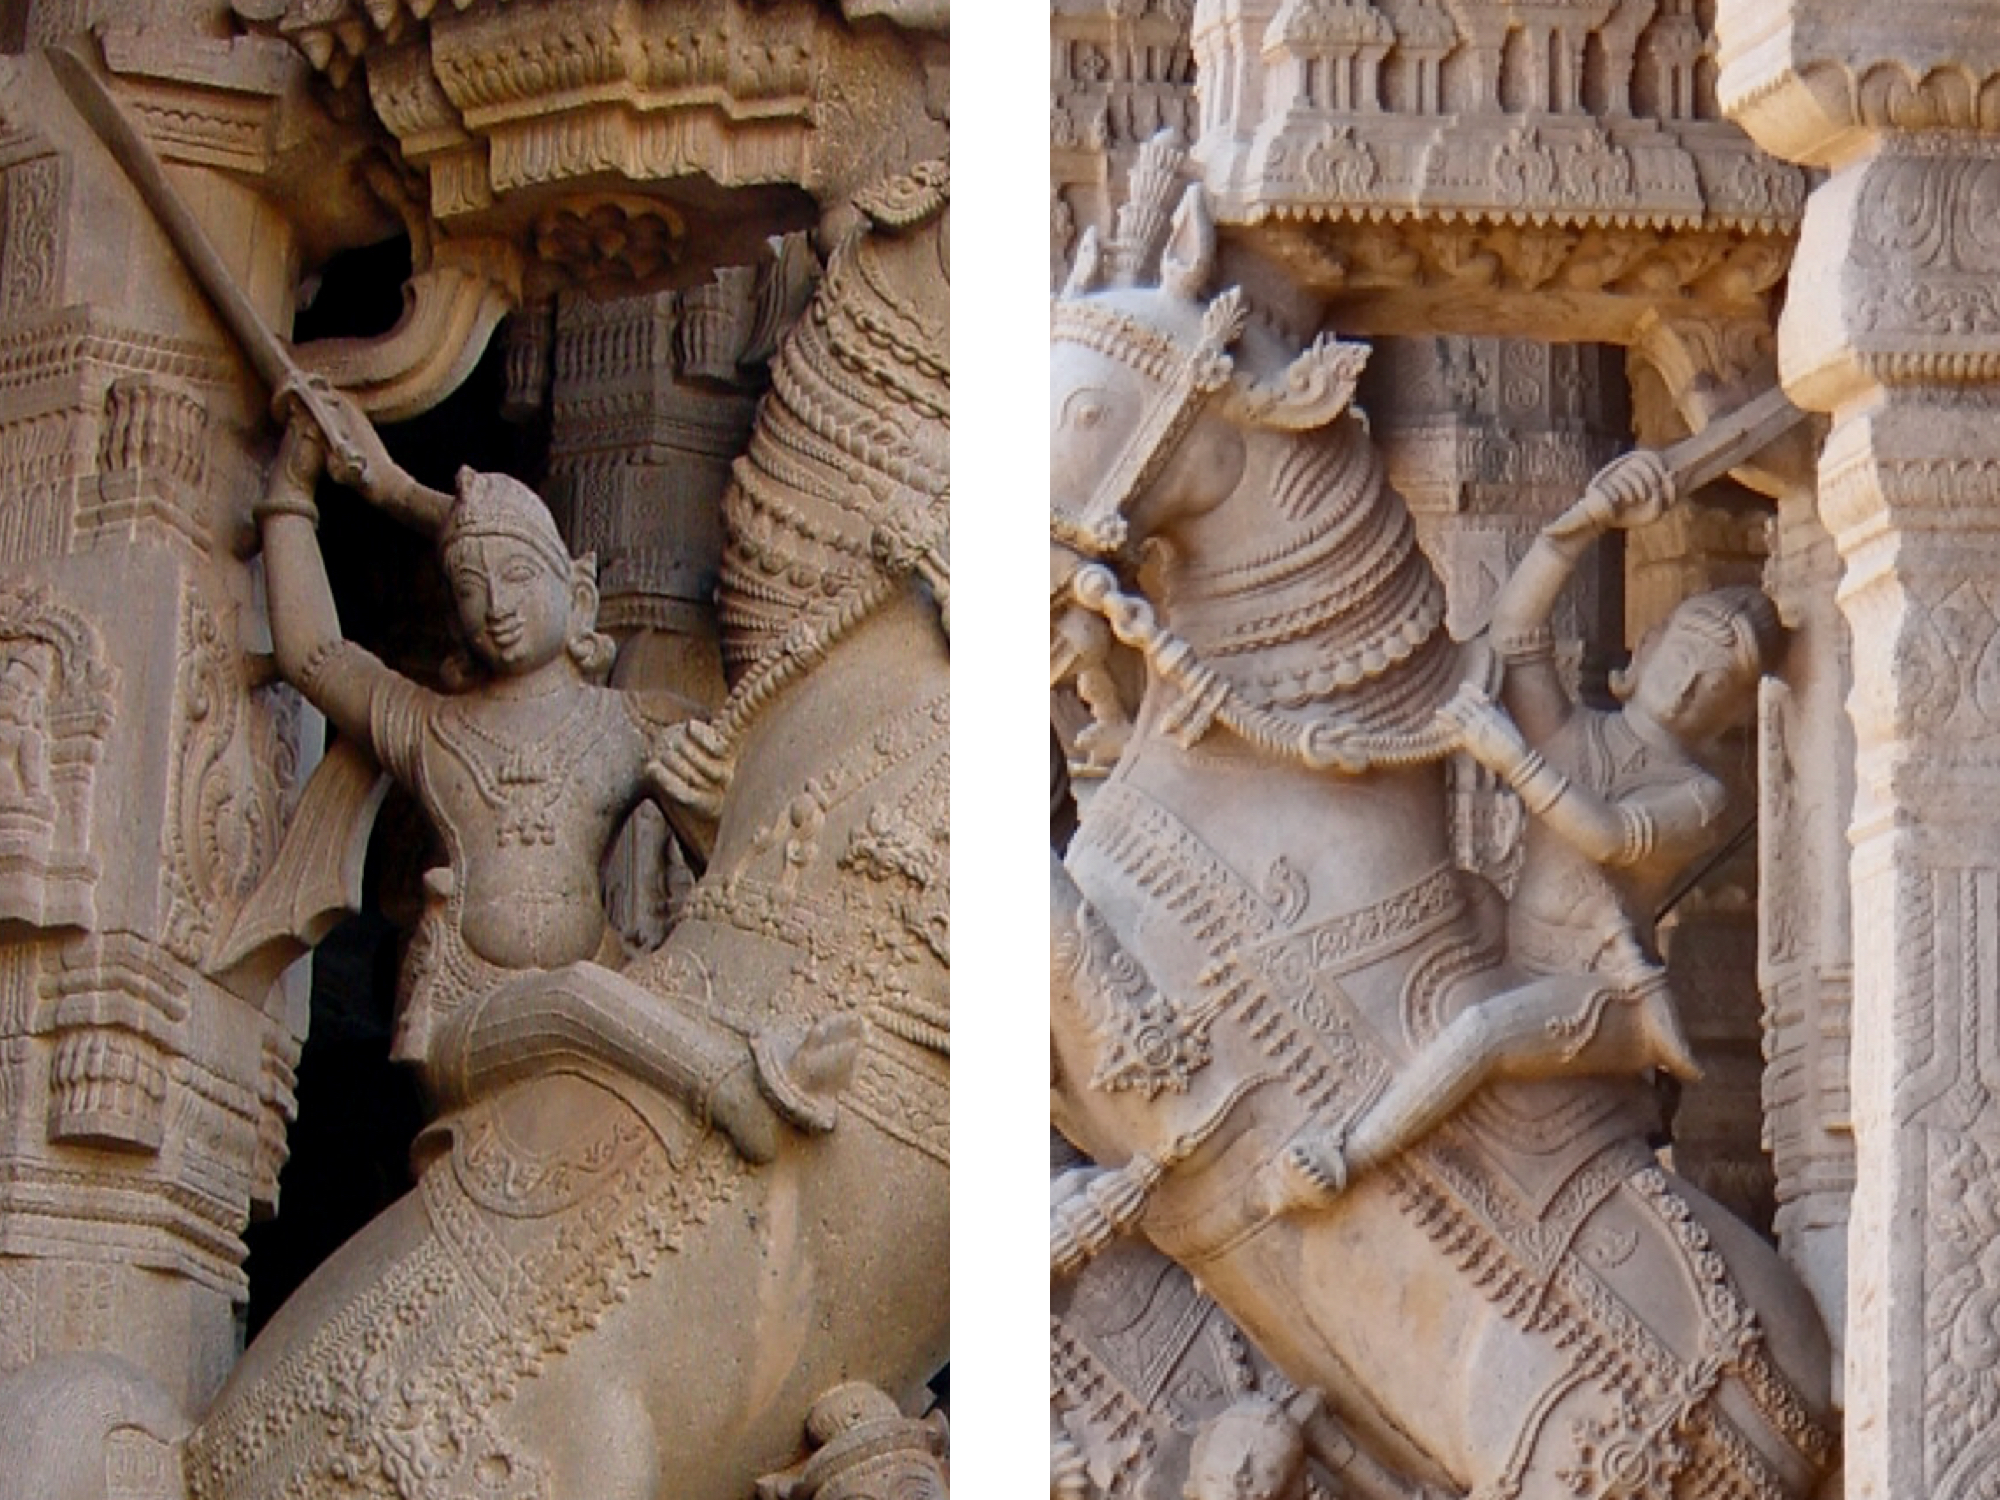 Vijayanagara statues with swords